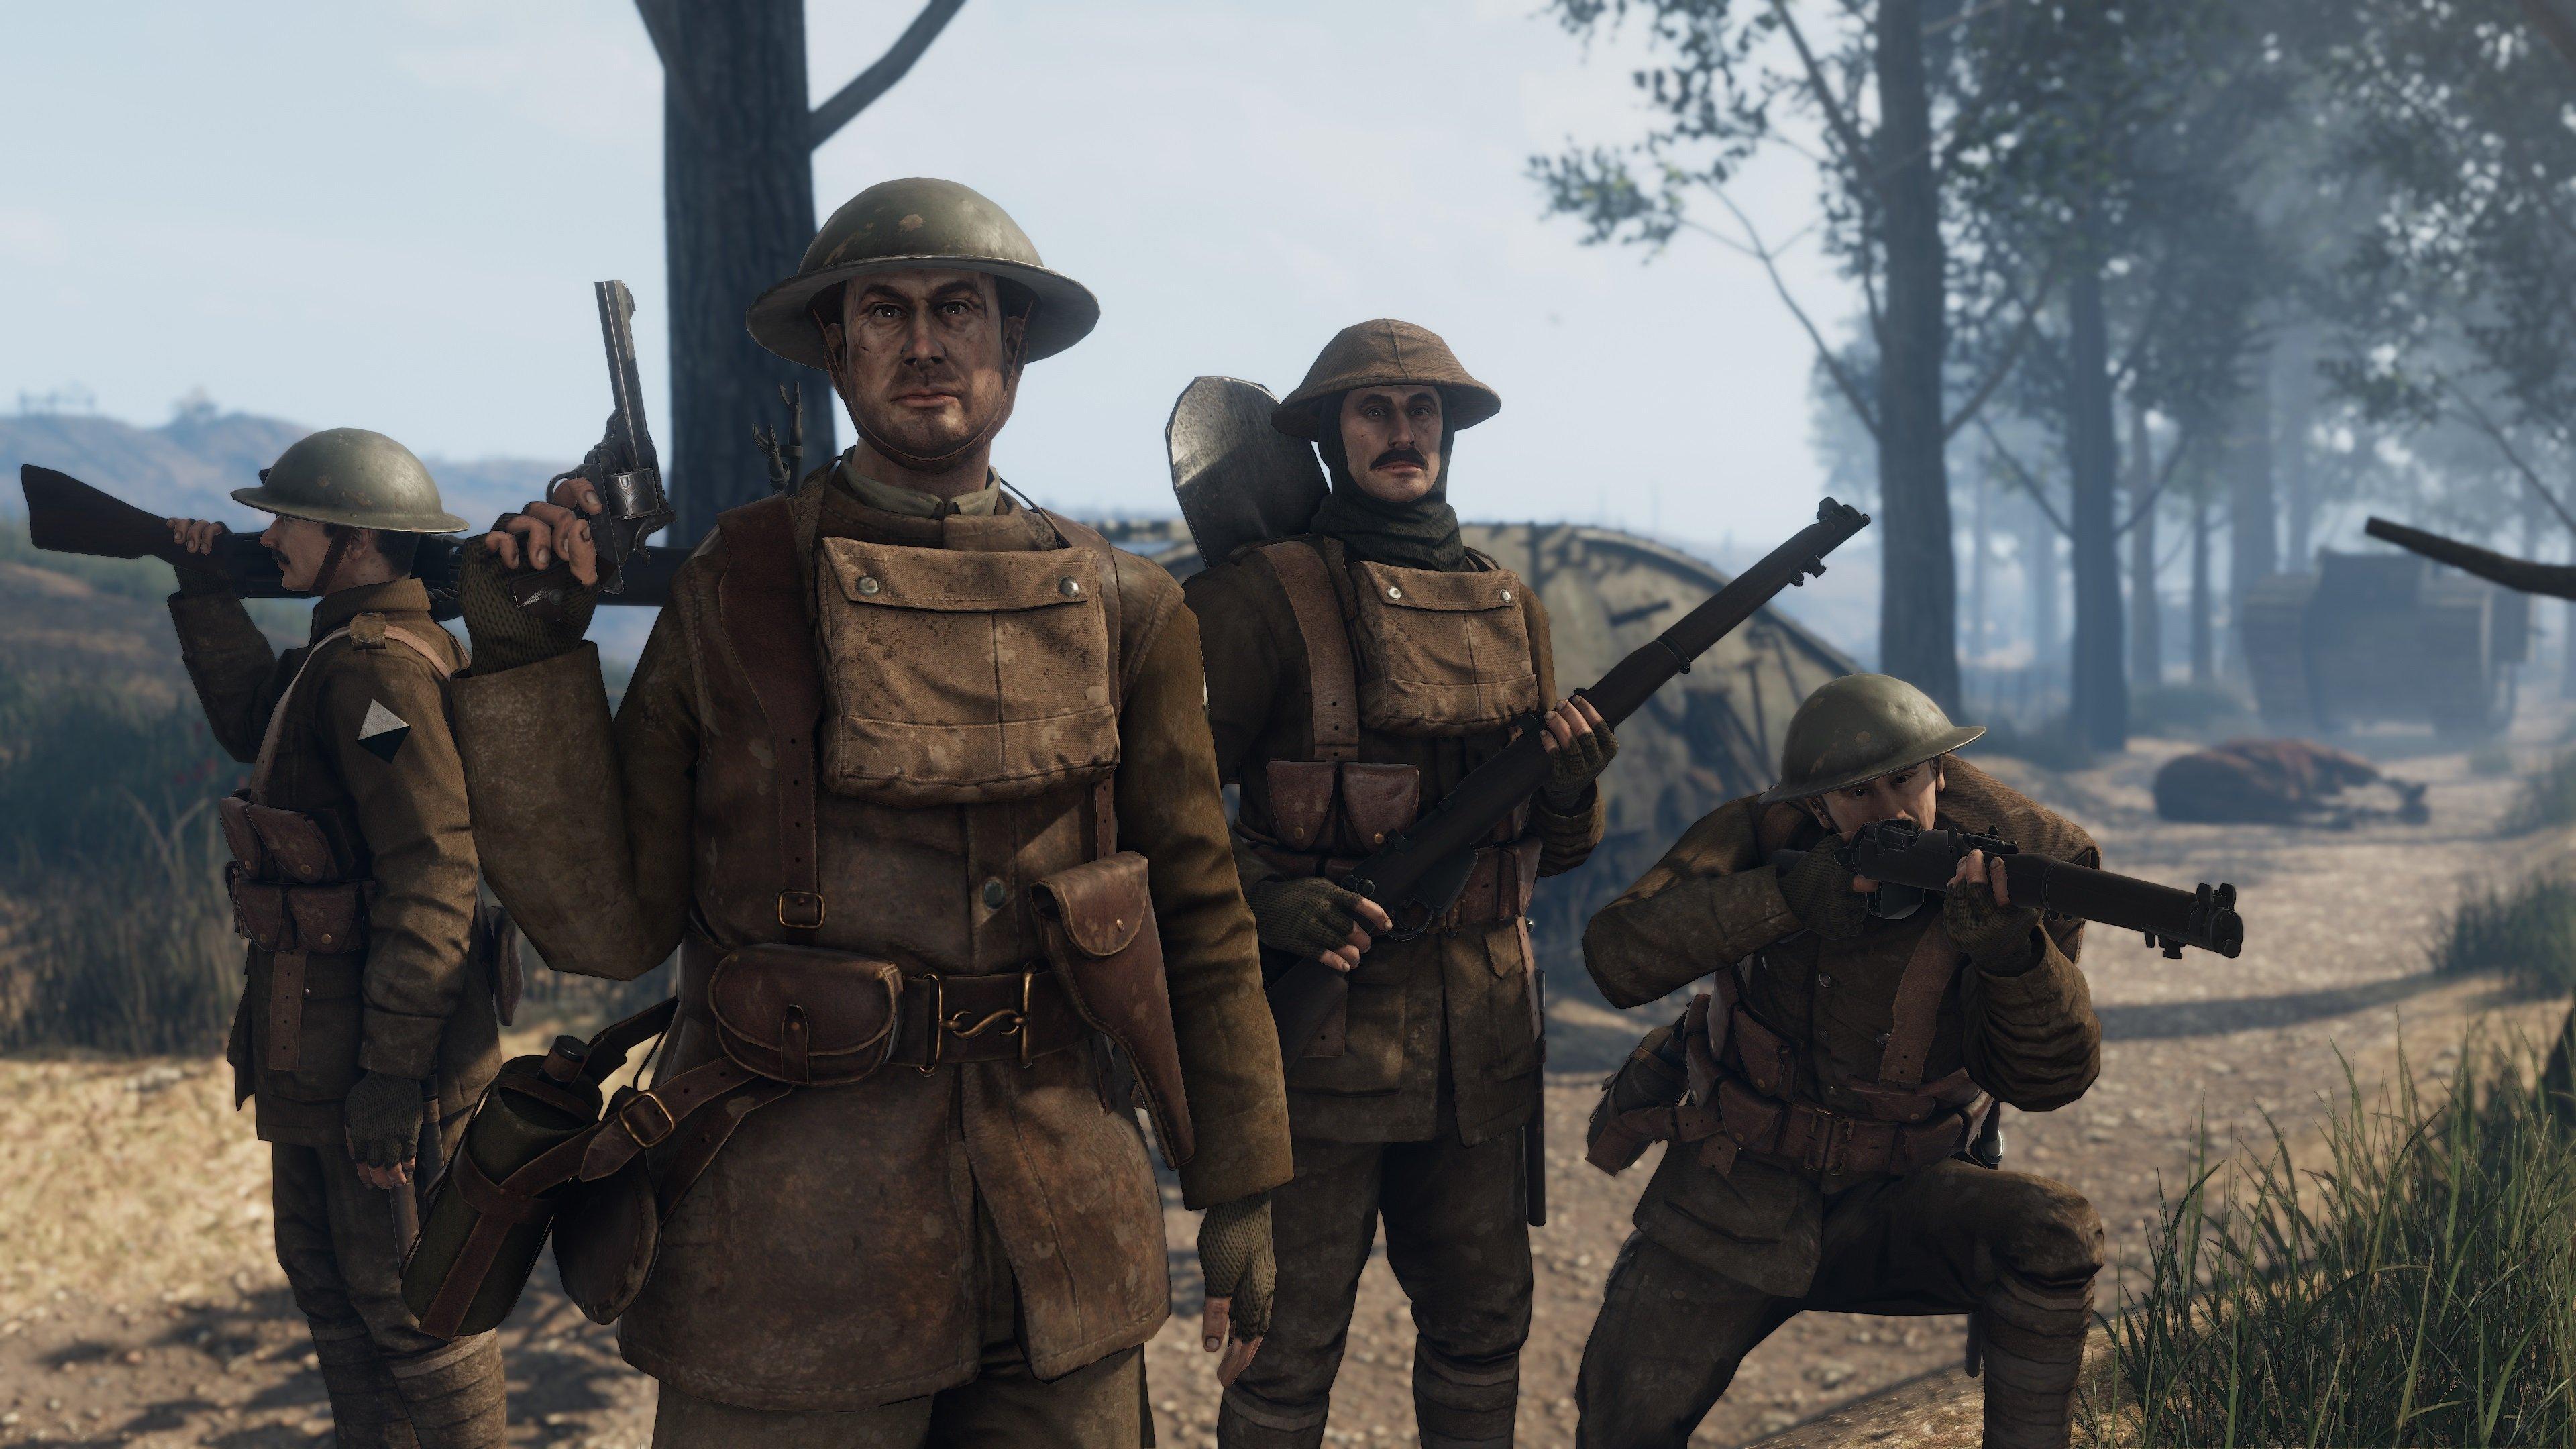 WWI: Verdun - Western Front - PlayStation 4